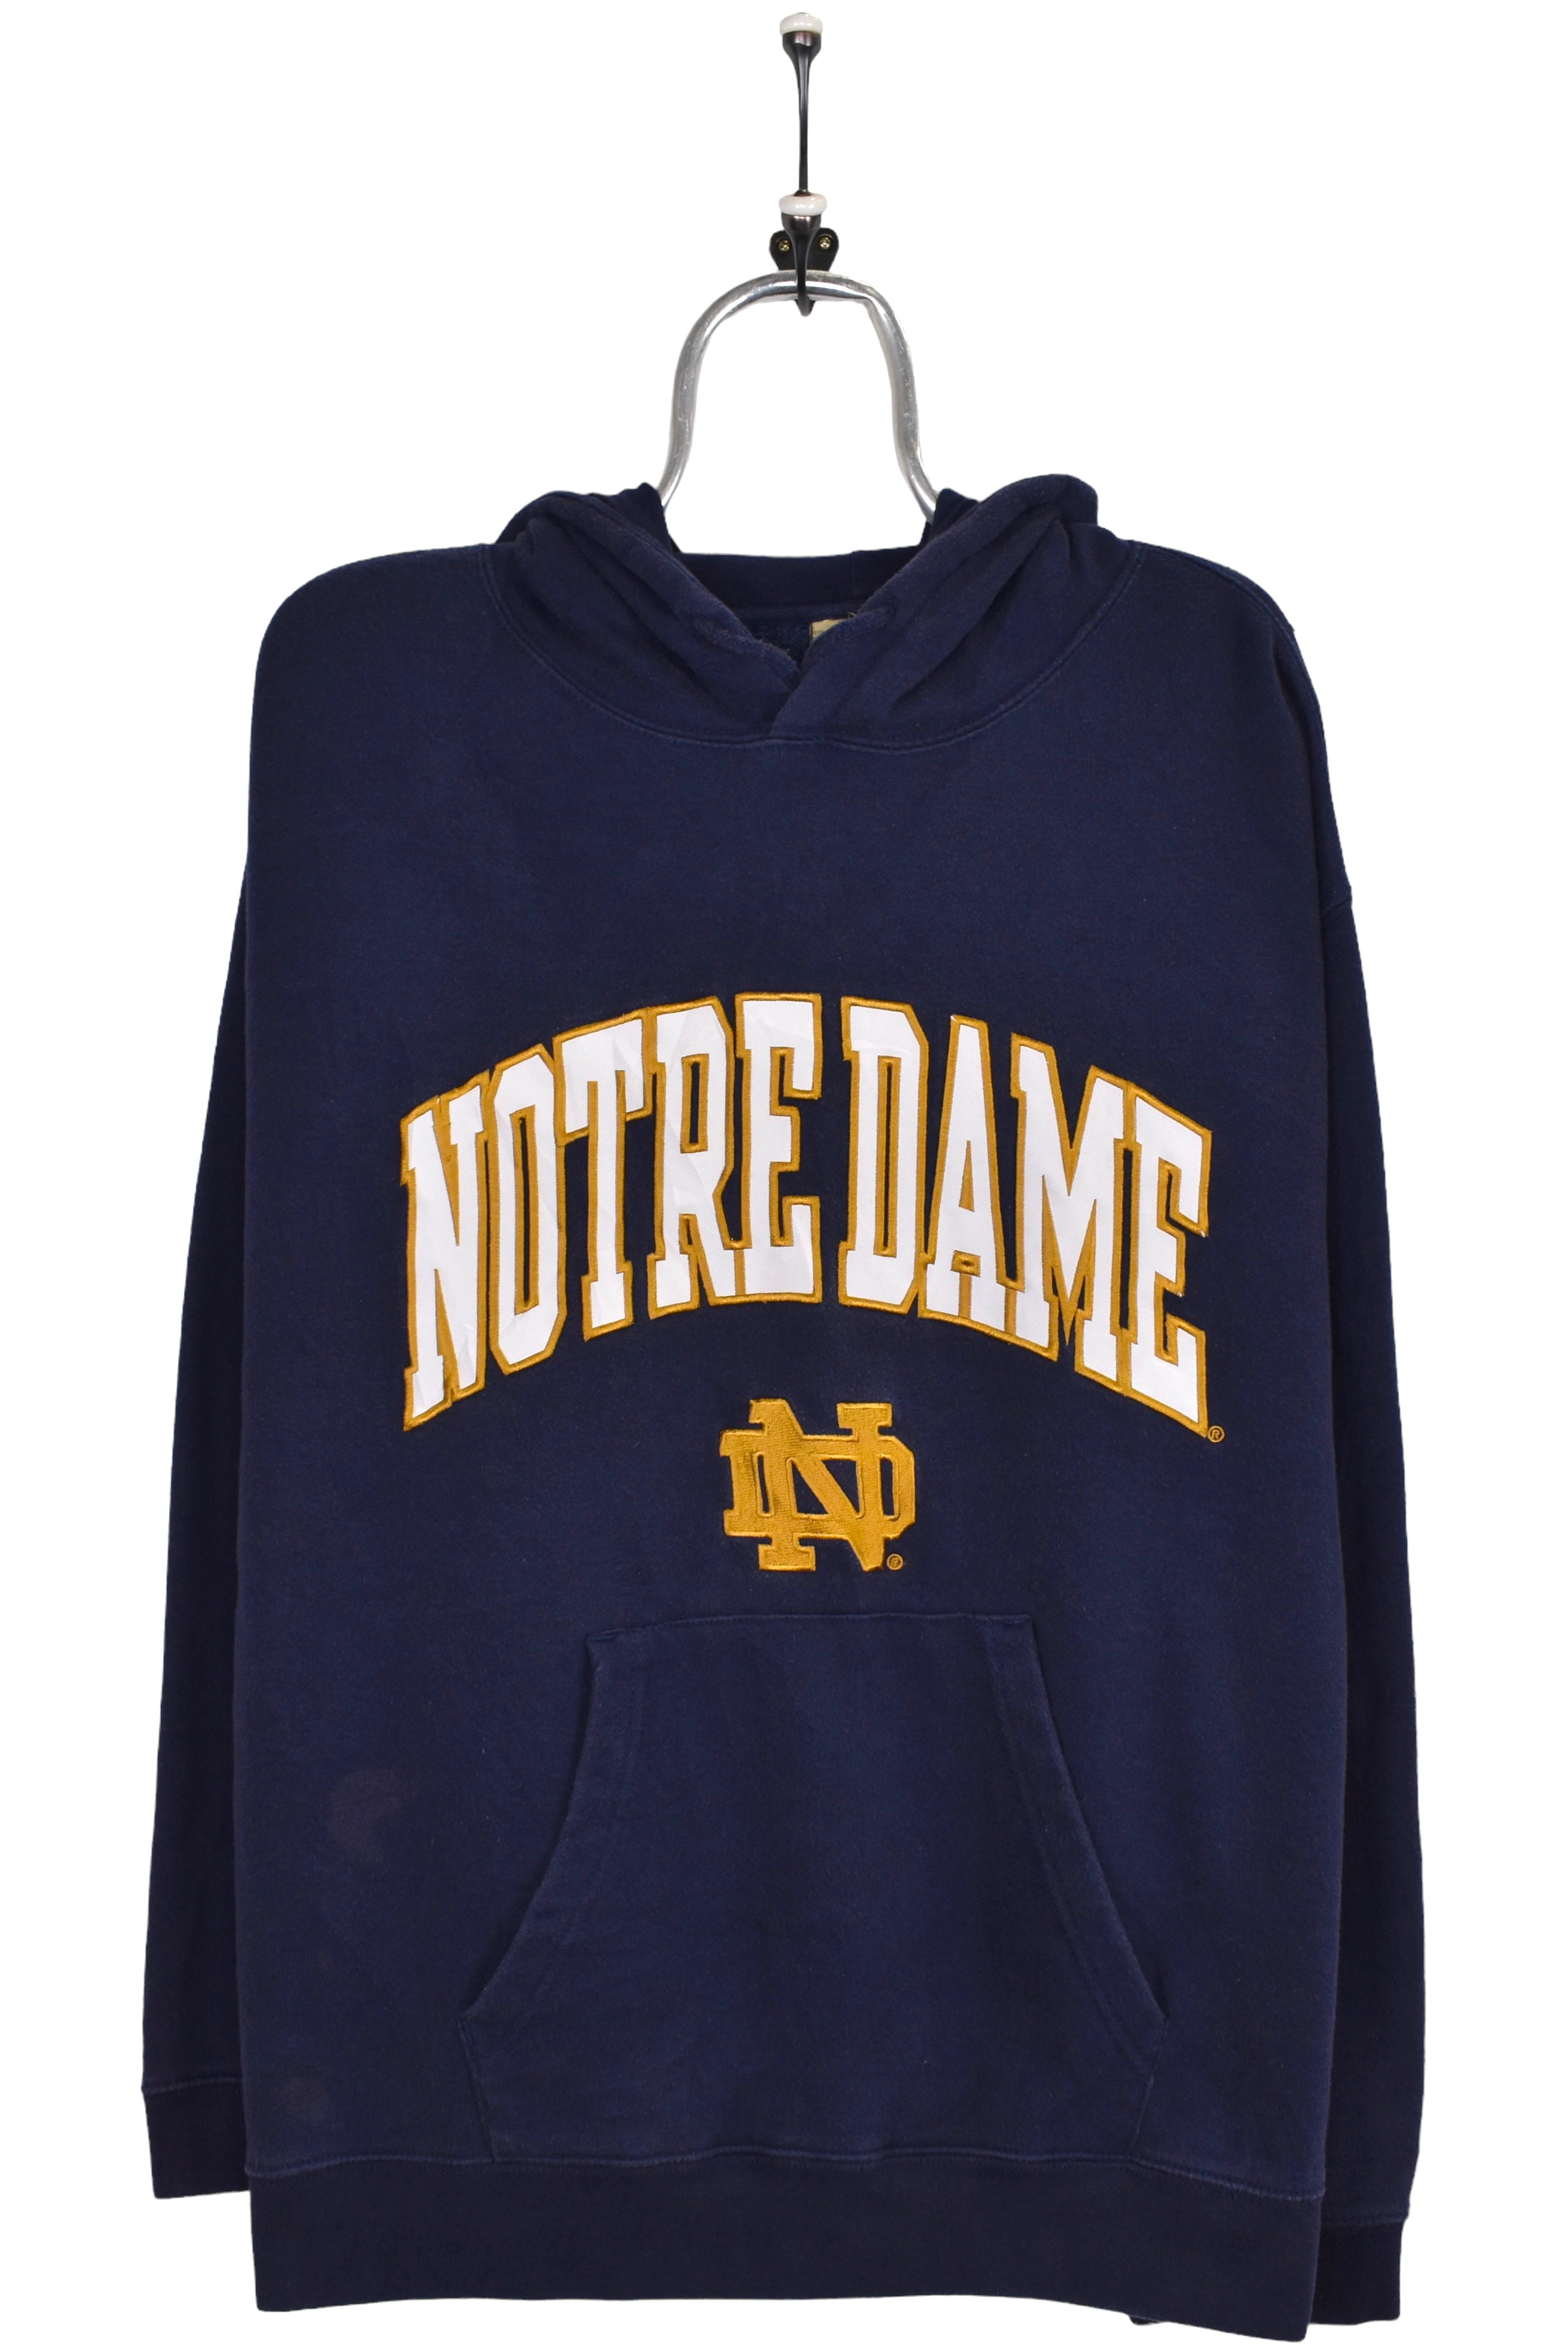 Vintage University of Notre Dame navy sweatshirt -